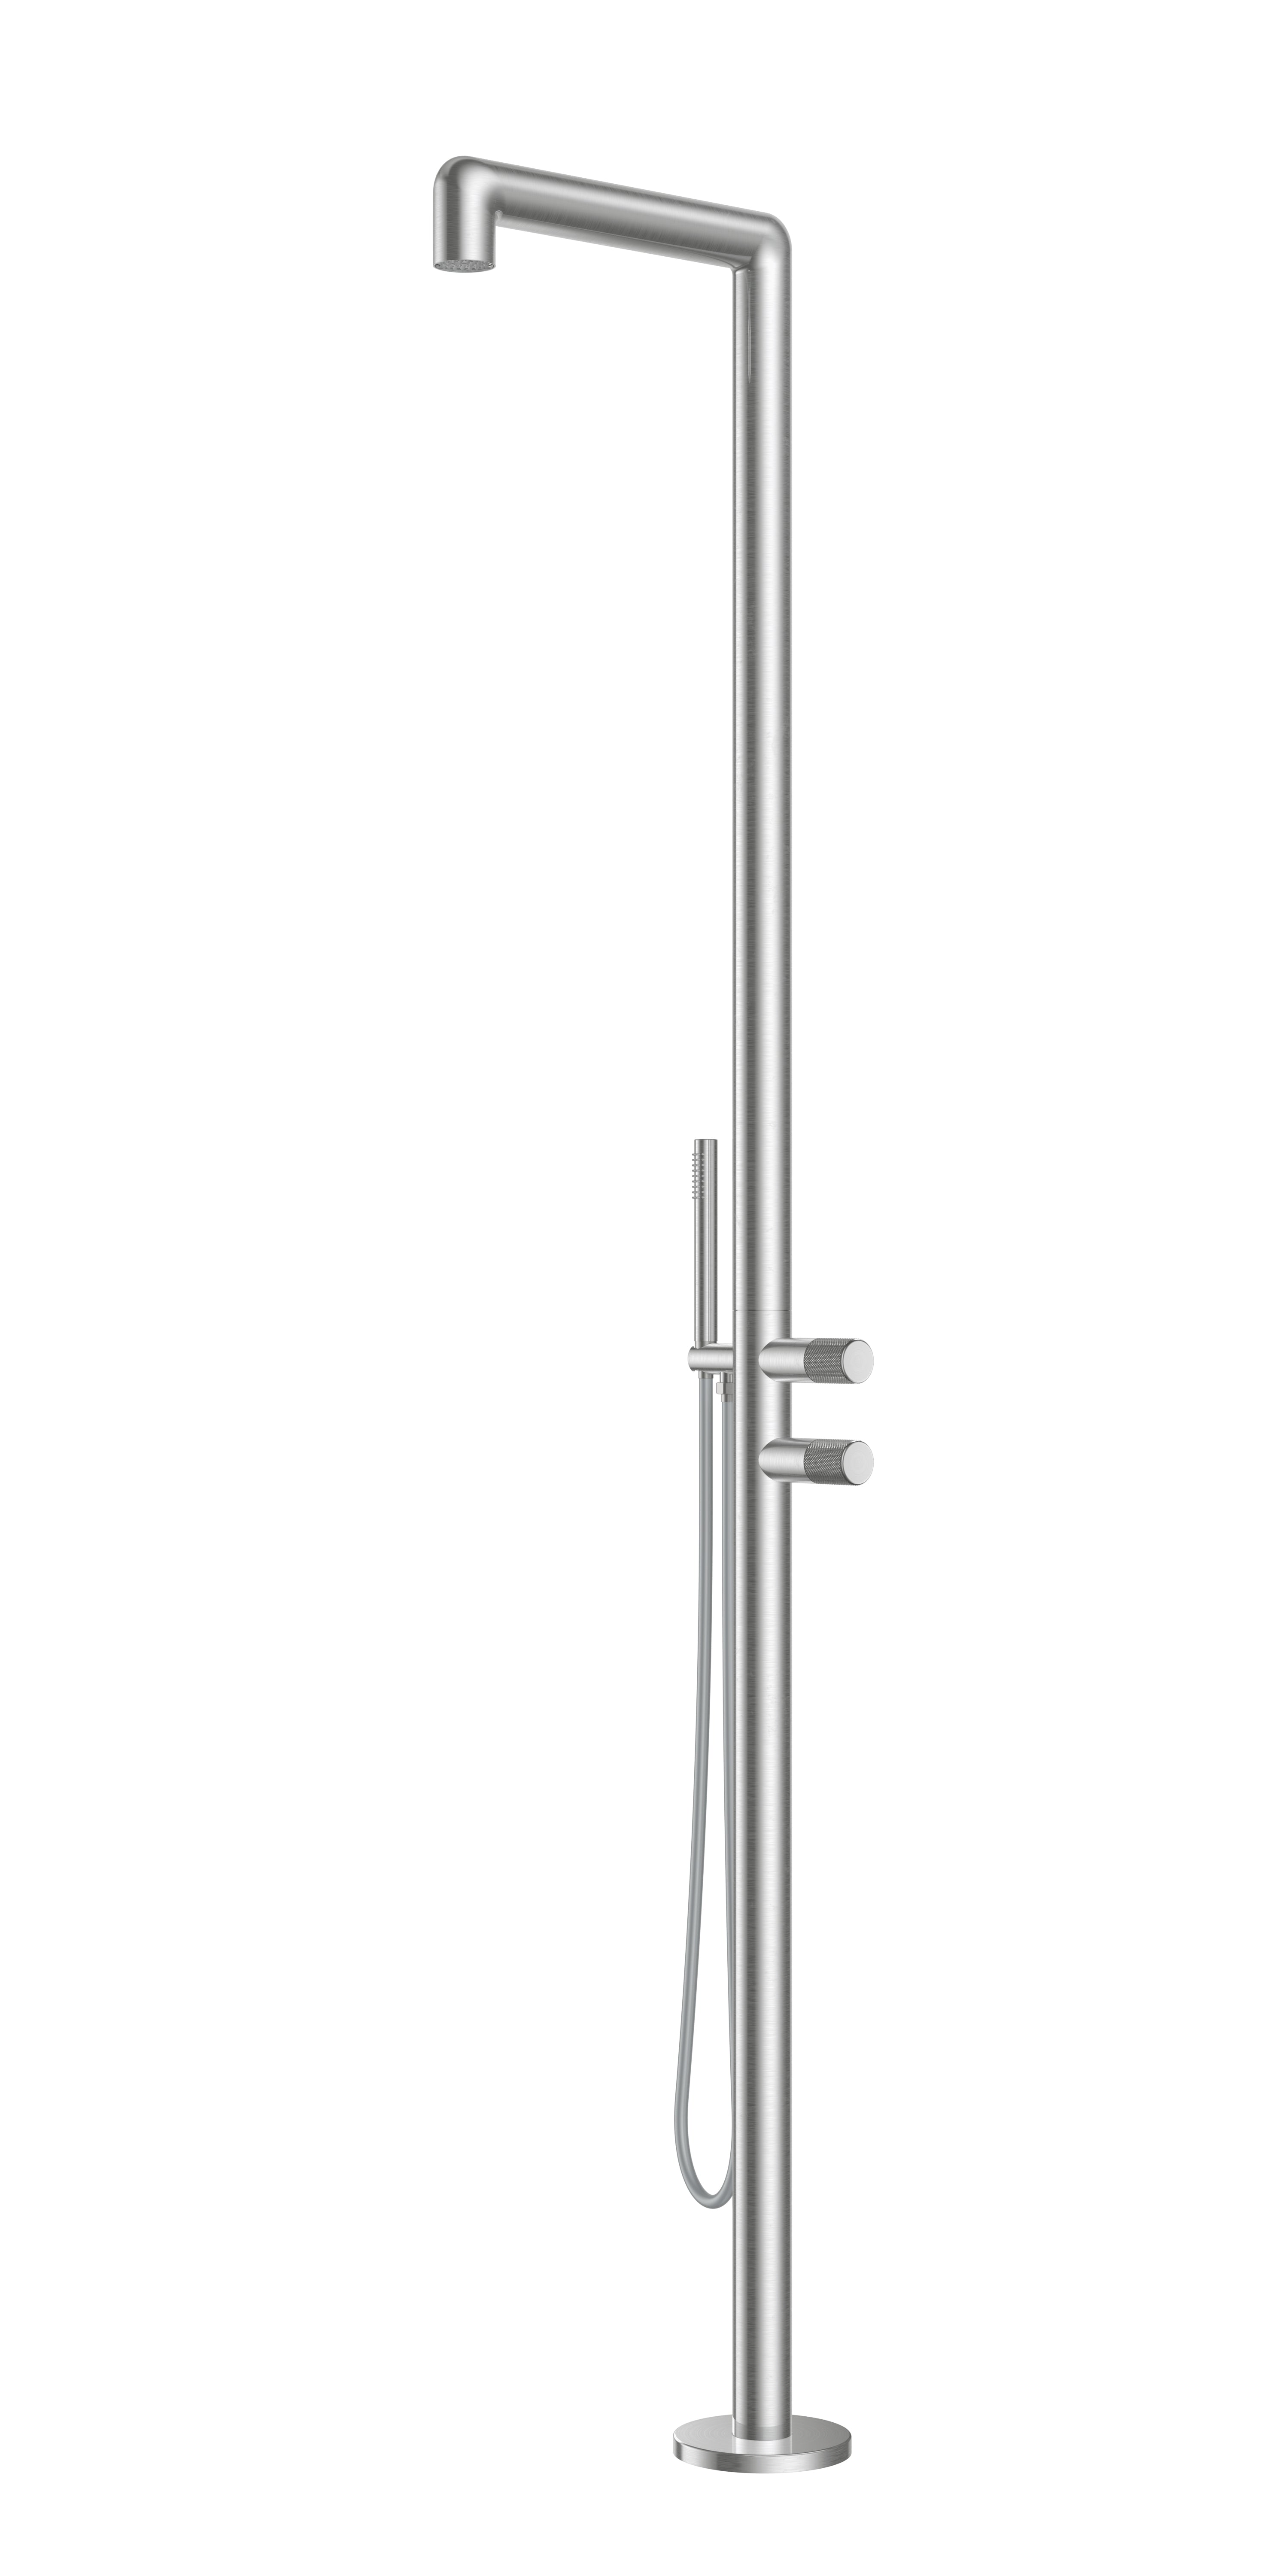 DAX Freestanding Outdoor Shower Stainless Steel with Hand Shower (DAX-807271)